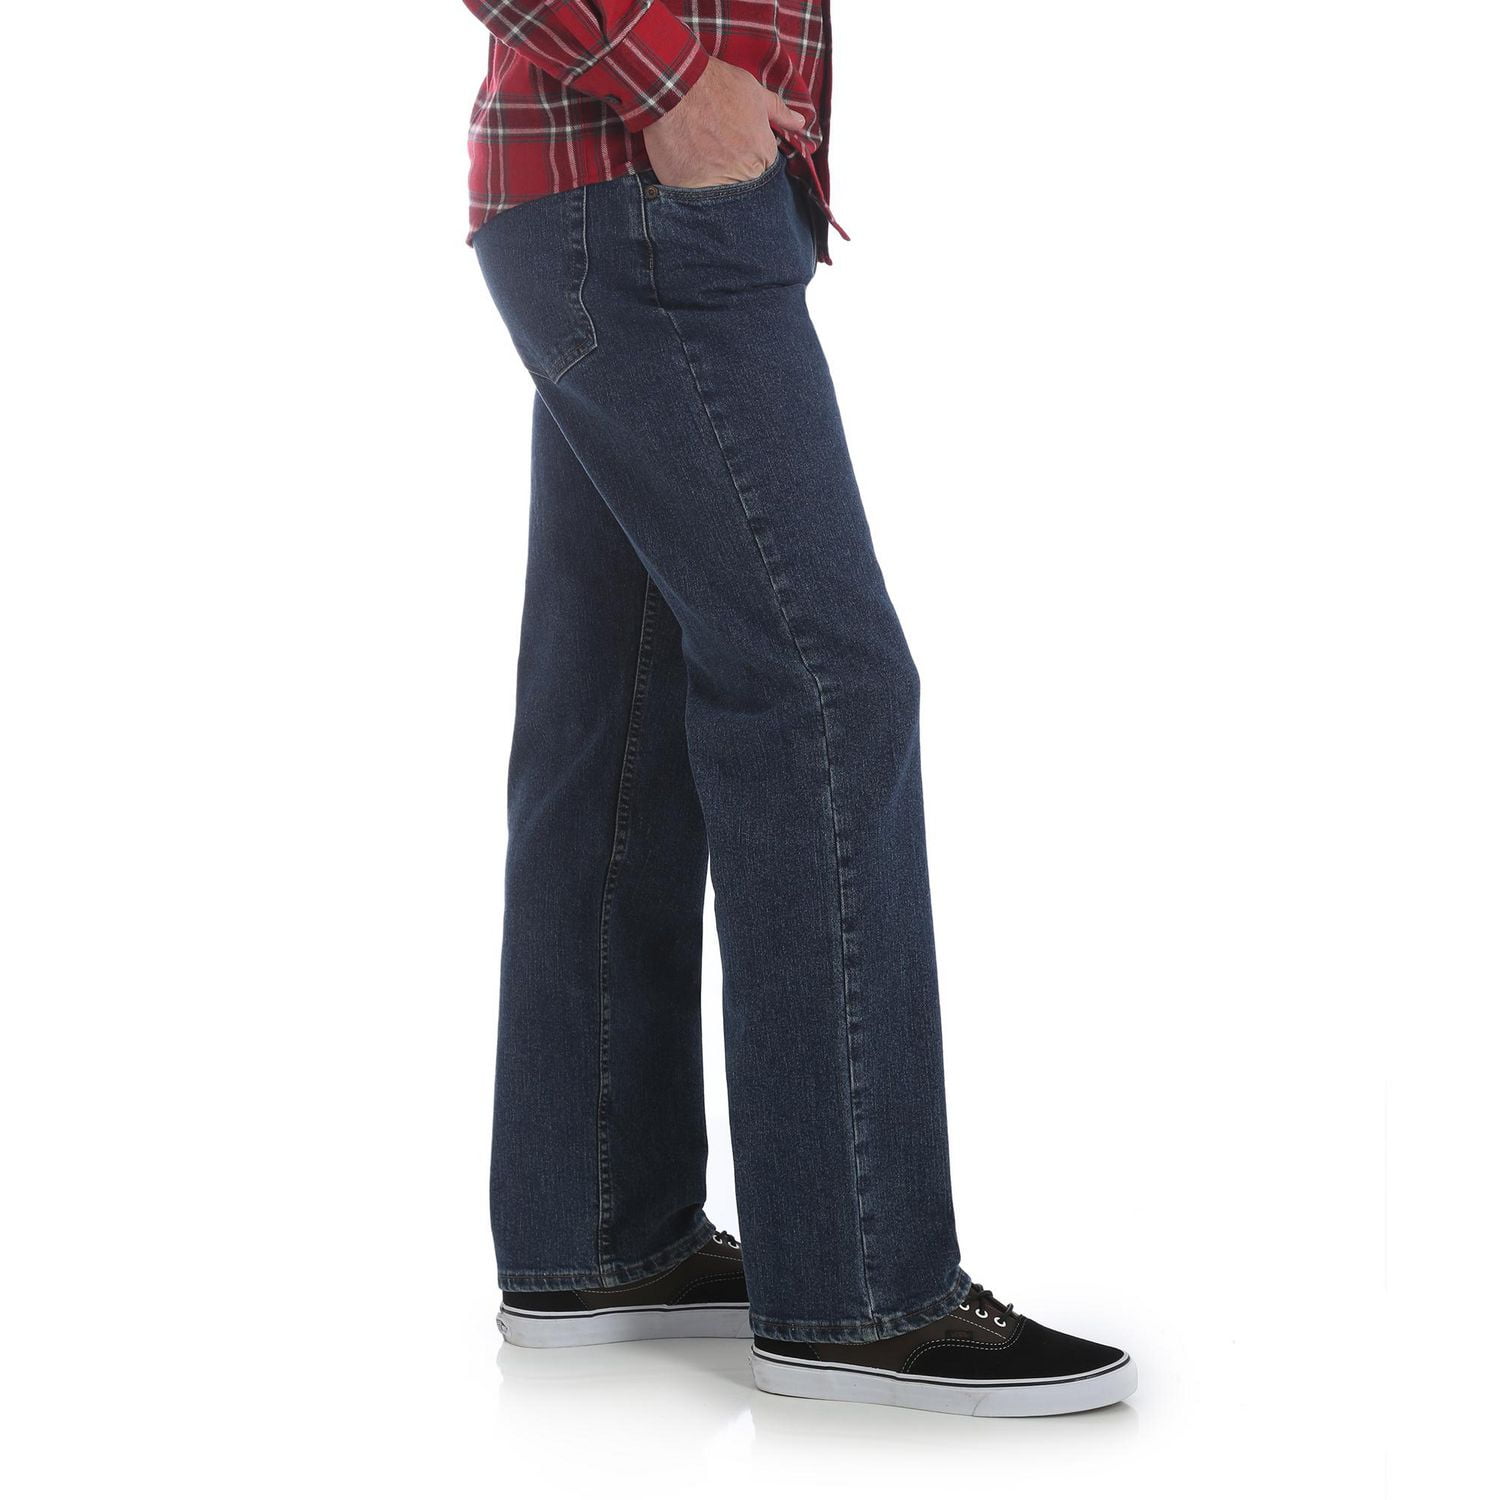 Wrangler Men's Performance Regular Fit Jean, Regular fit, 5 pocket